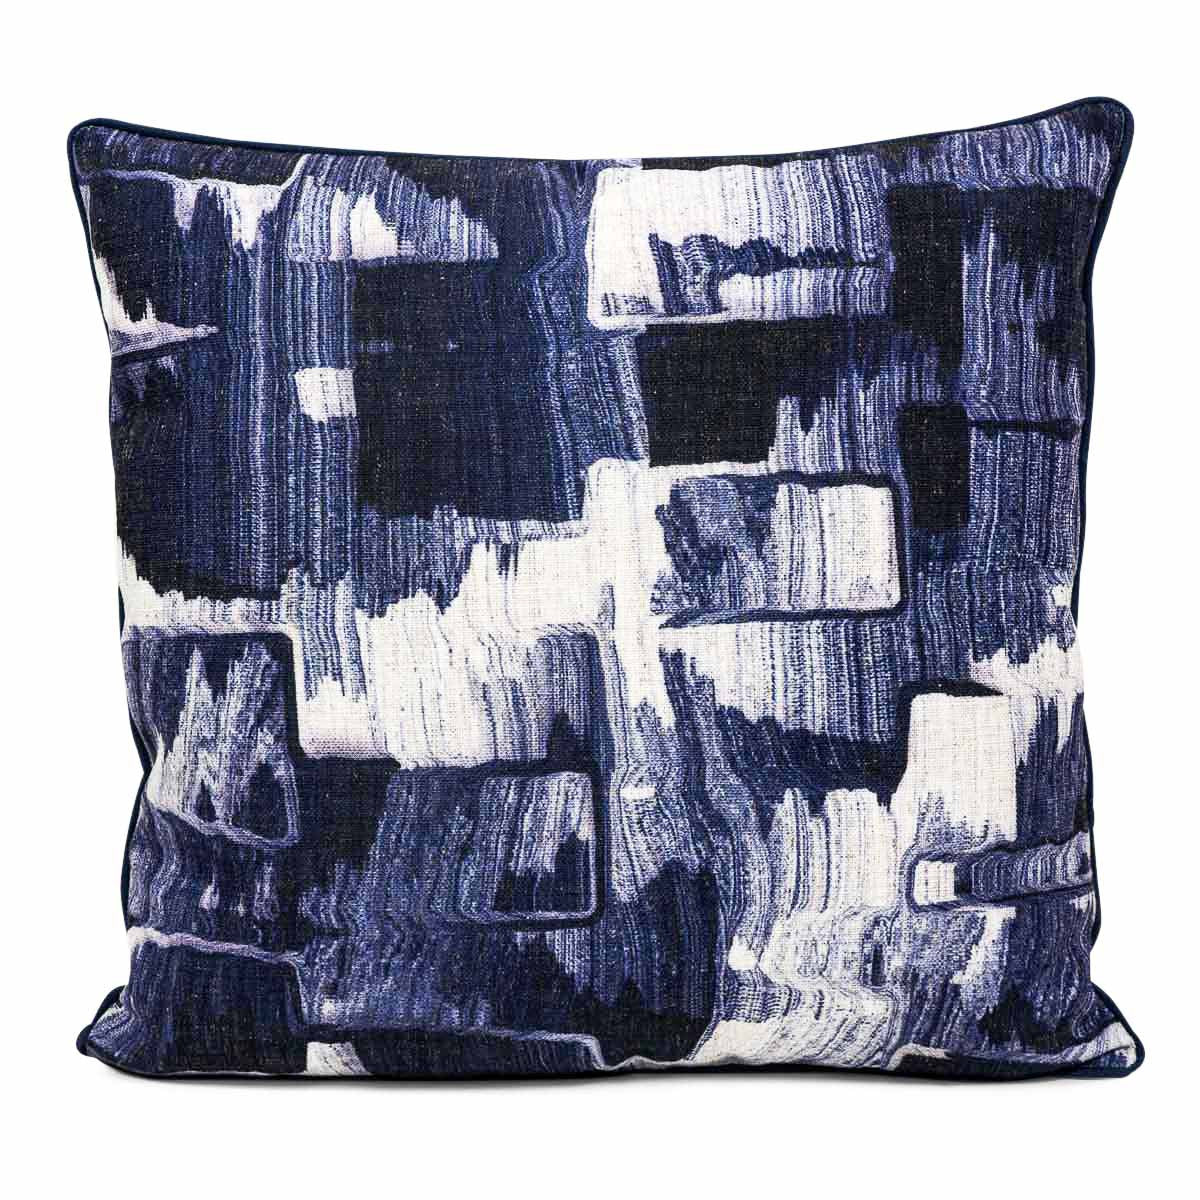 Denim Abstract Pillow in Navy Blue - ModShop1.com